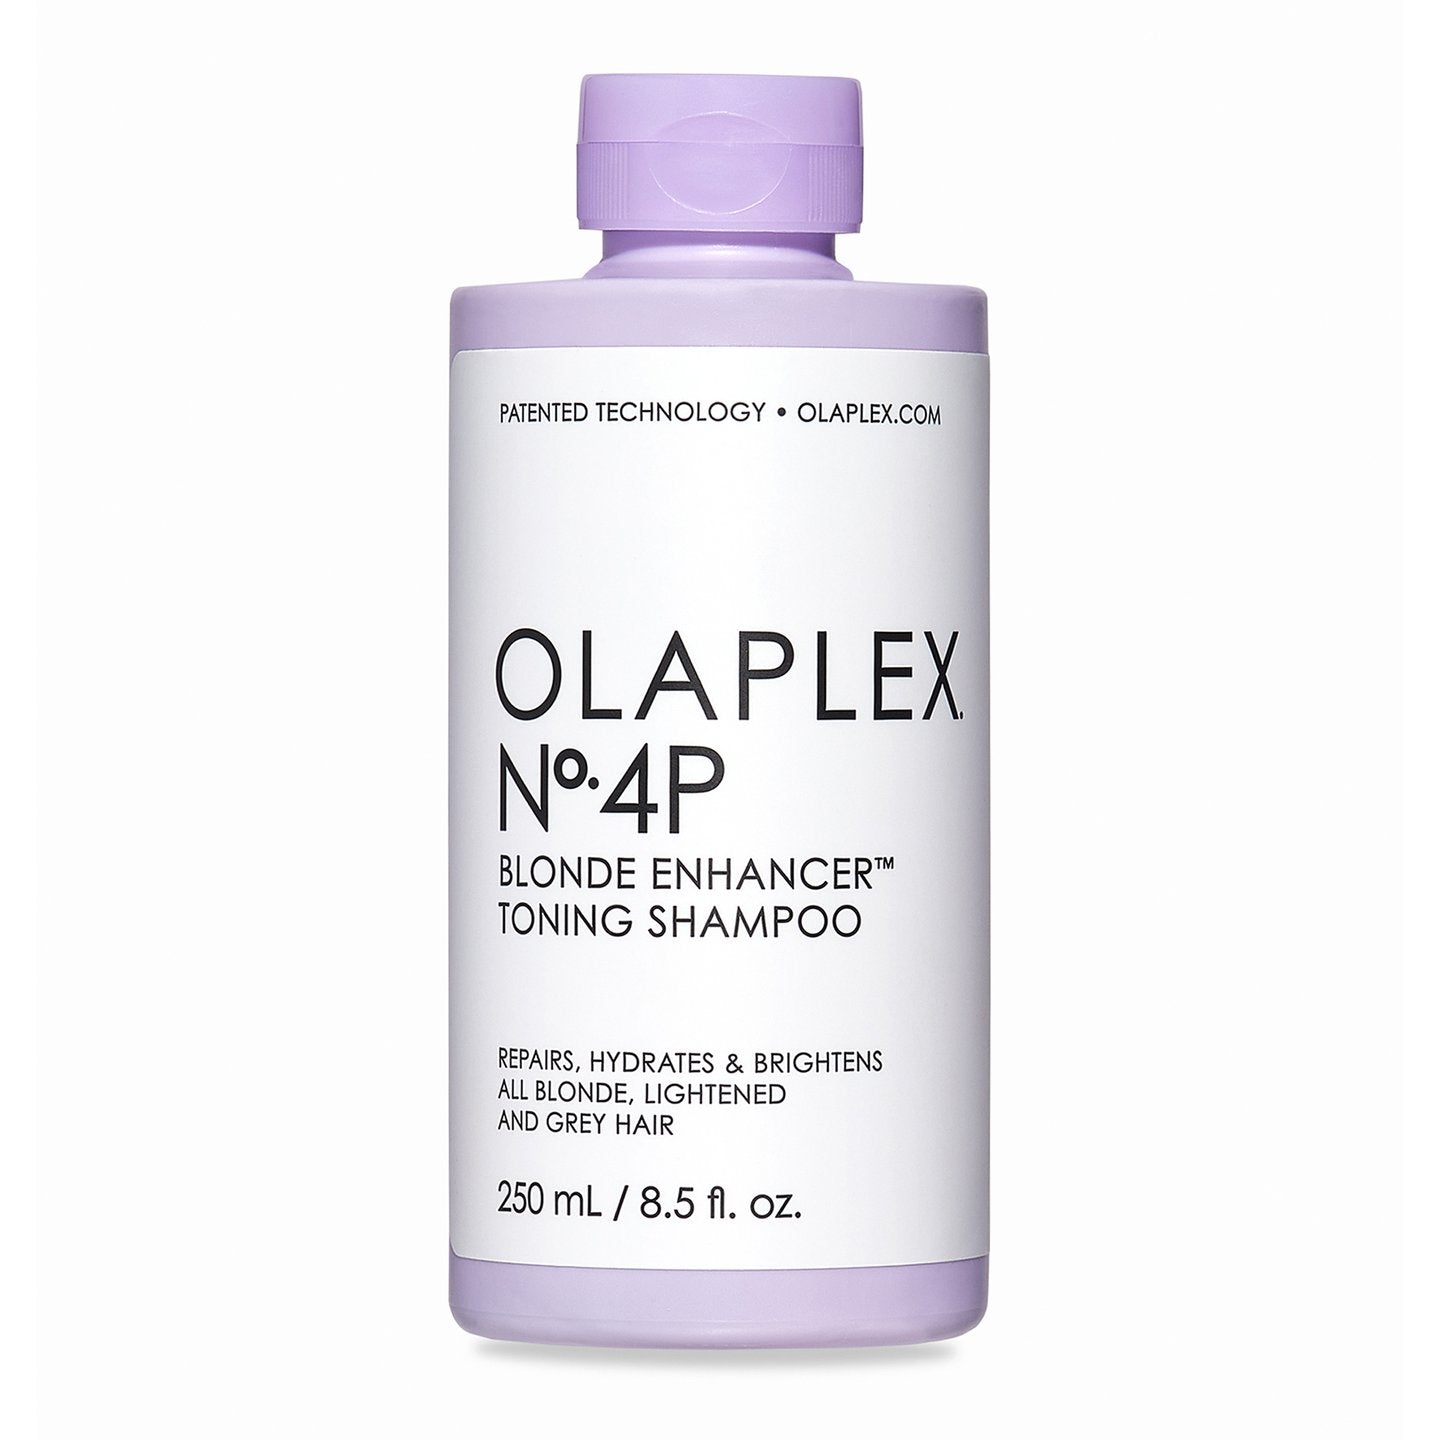 olaplex blonde enhancer toning shampoo